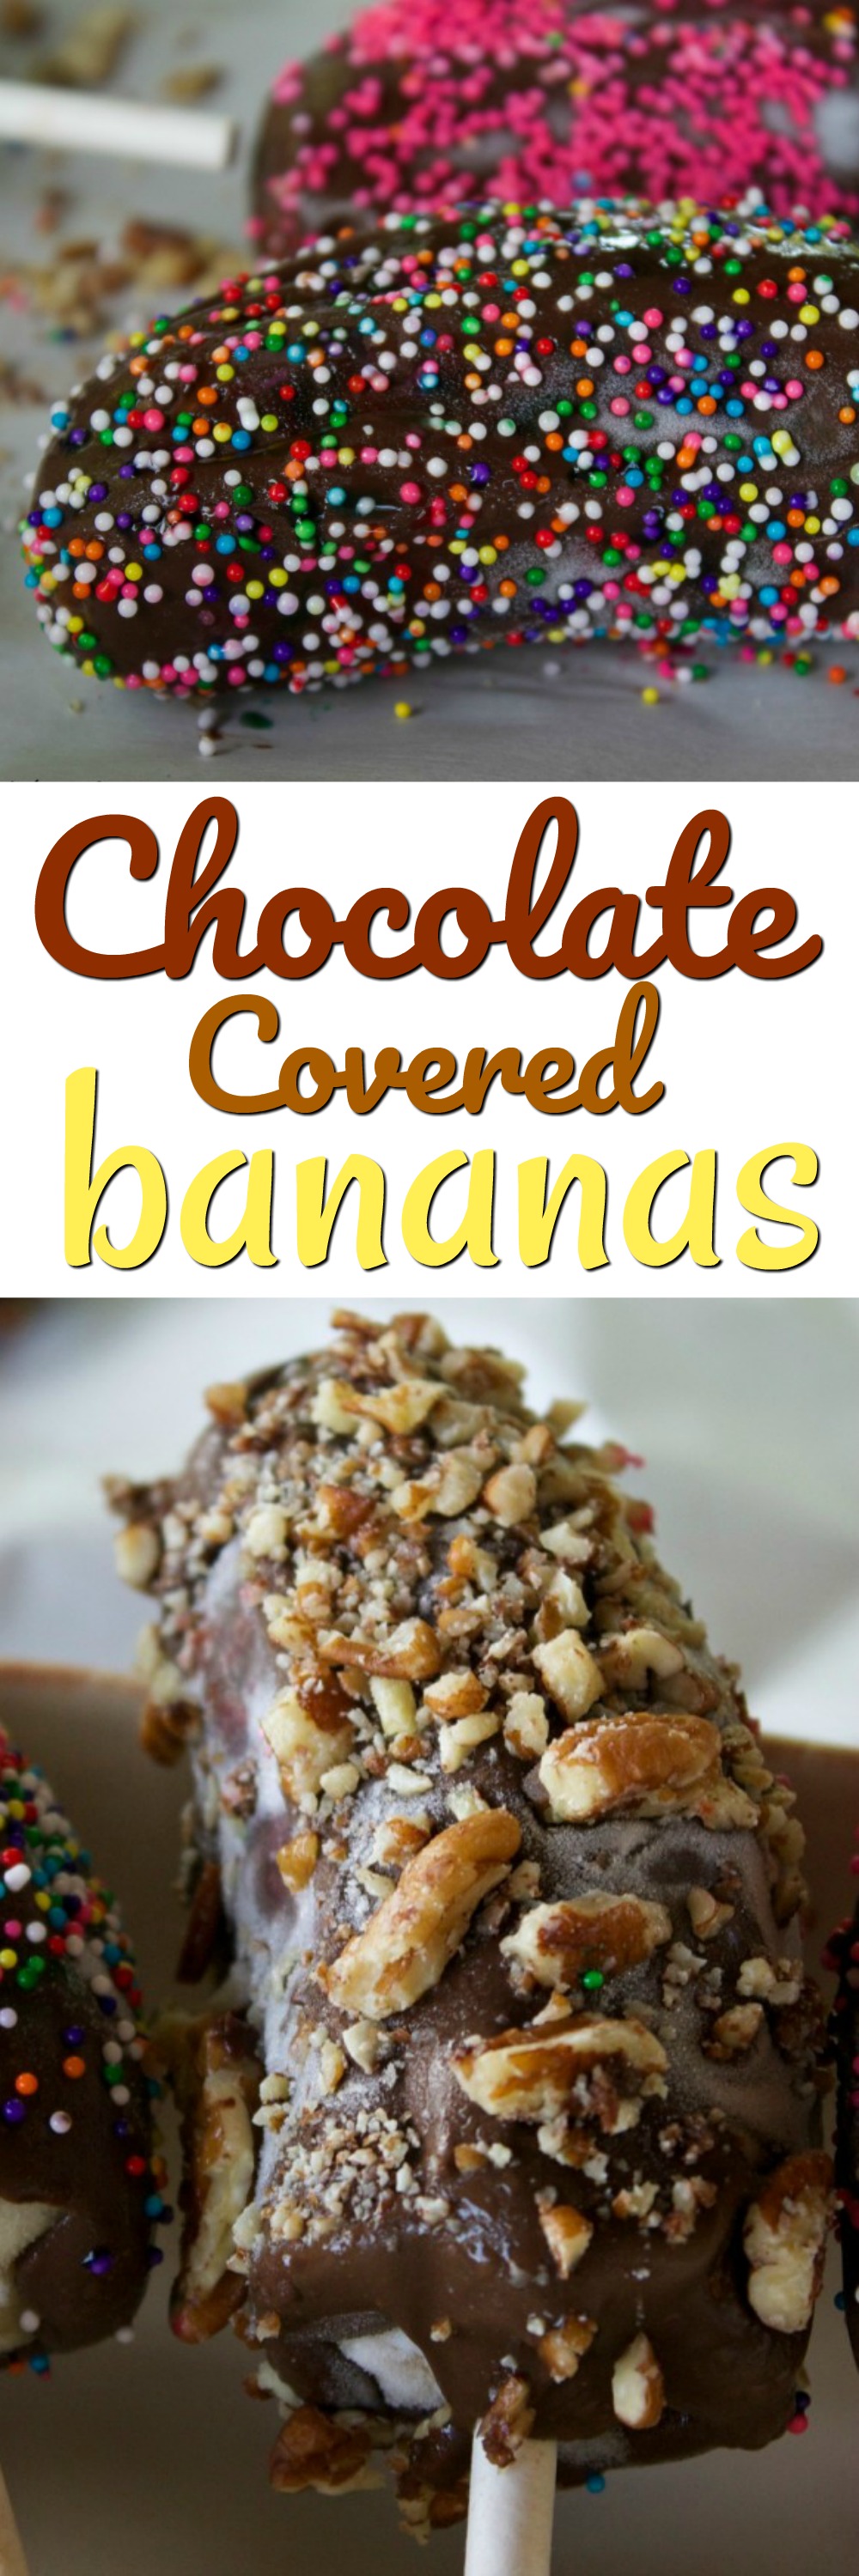 how to make chocolate covered bananas